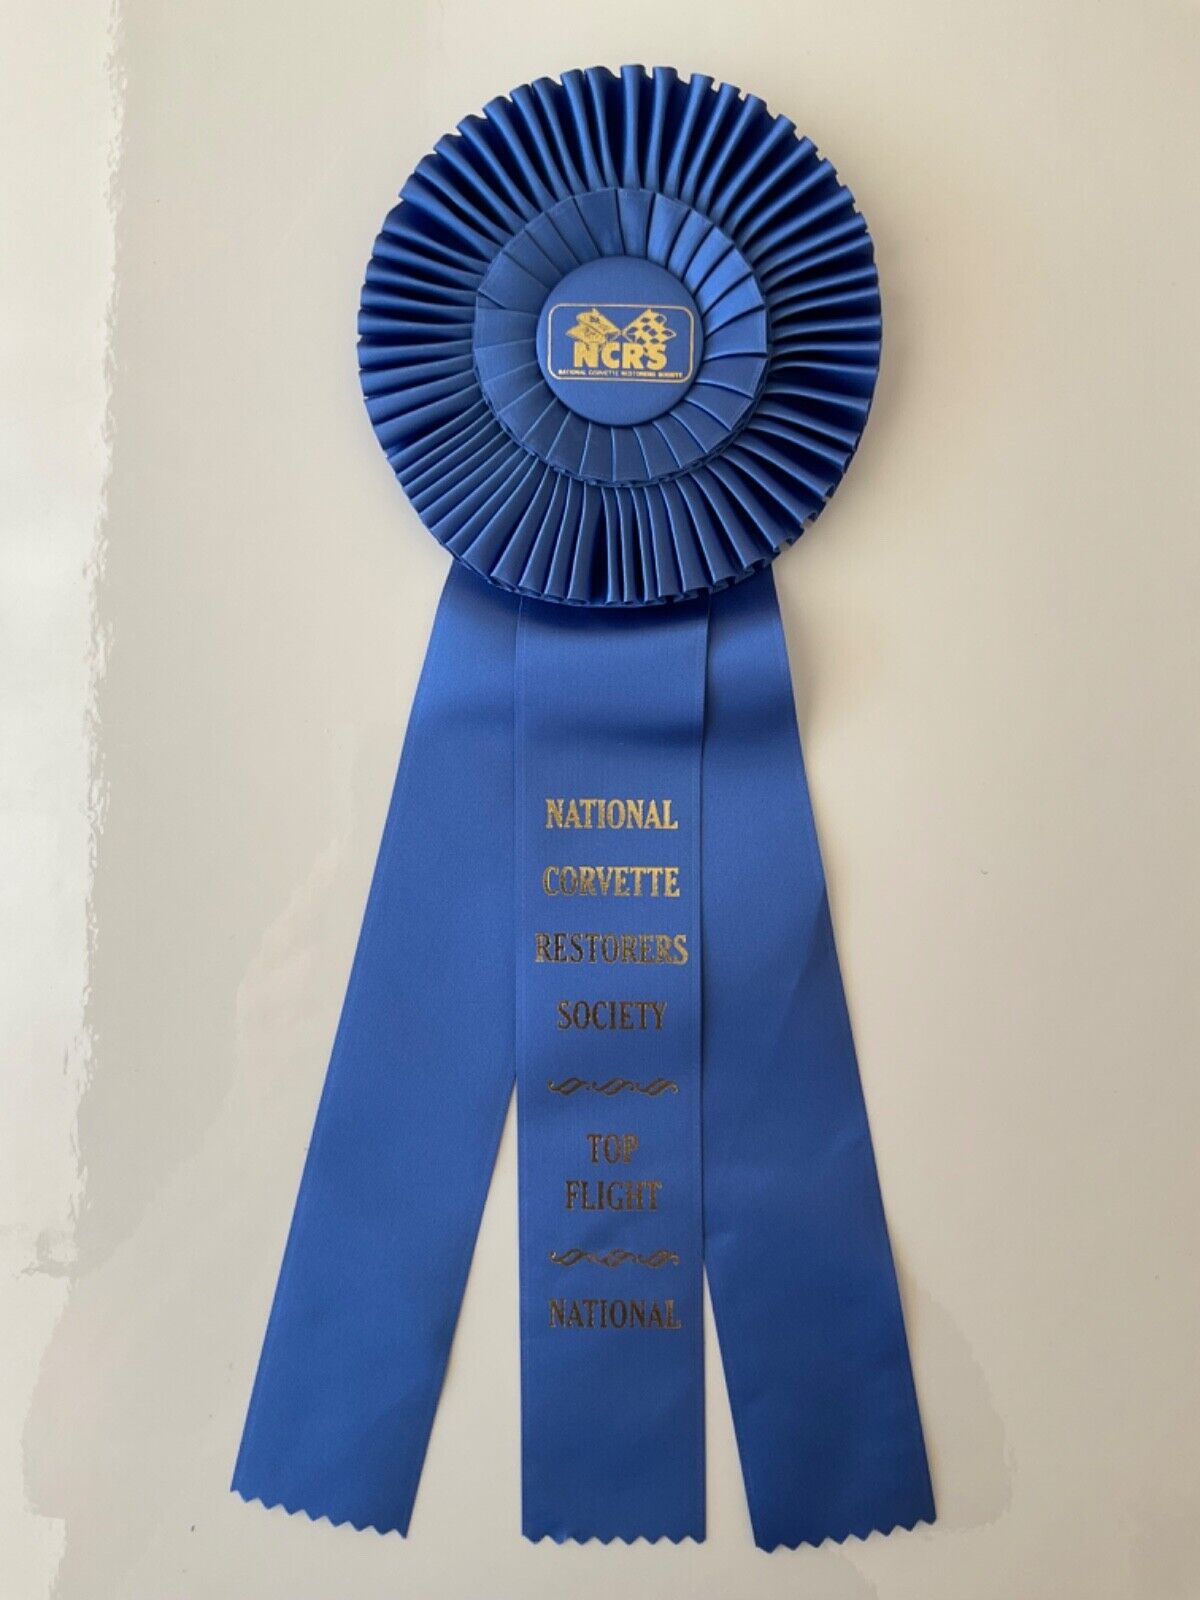 NCRS Award Top Flight National Blue Ribbon National Corvette Restores Society